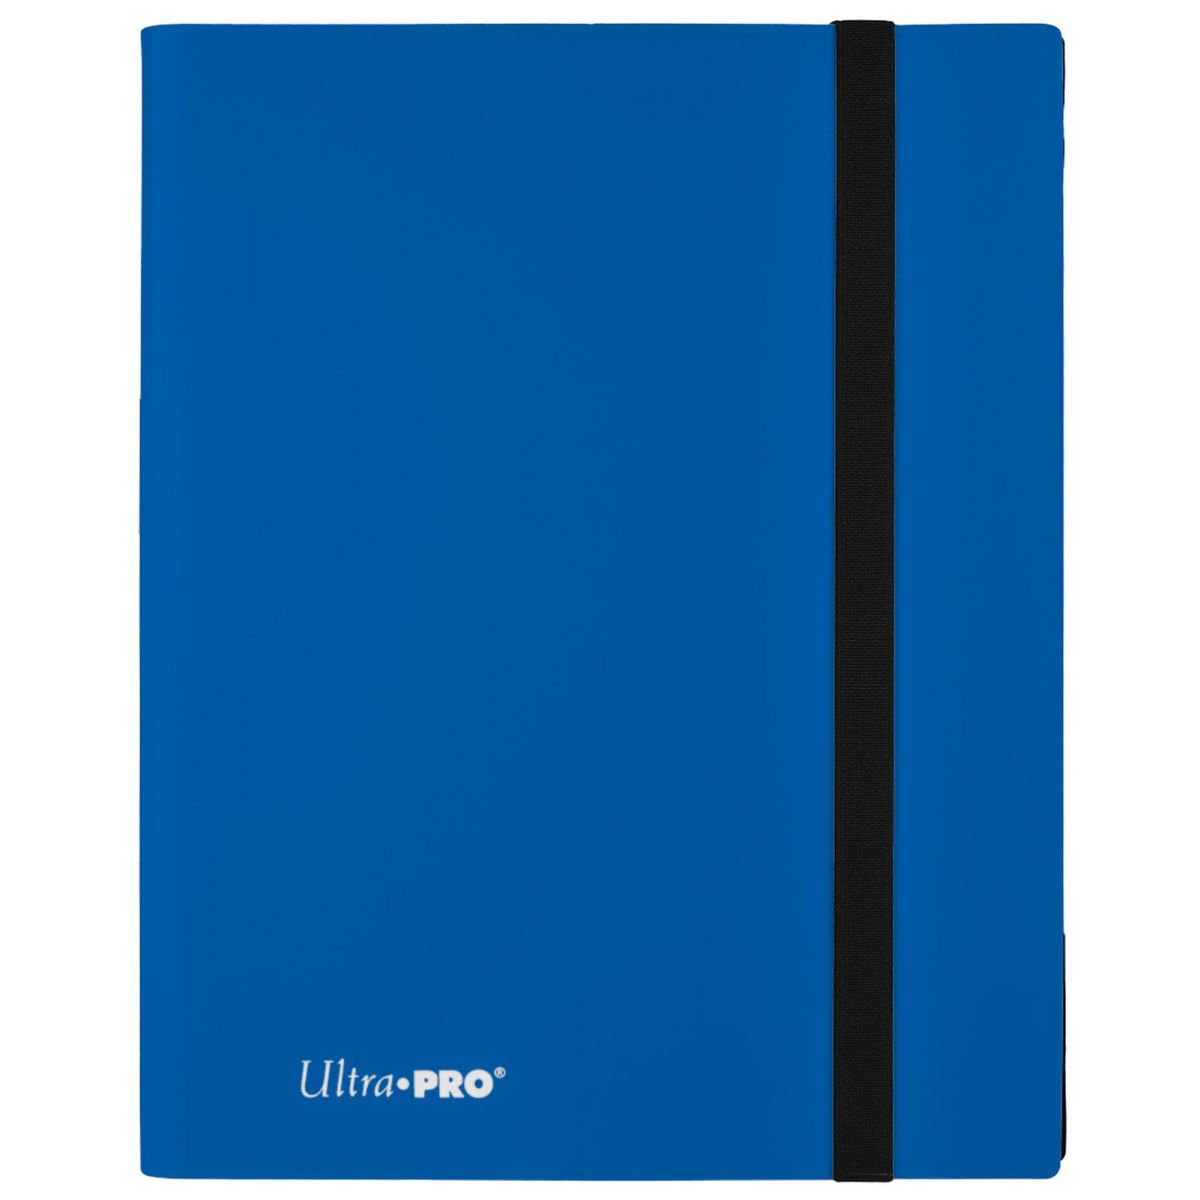 Ultra Pro - Pro Binder - Eclipse - 9 Cases - Blue / Pacific Blue (360)